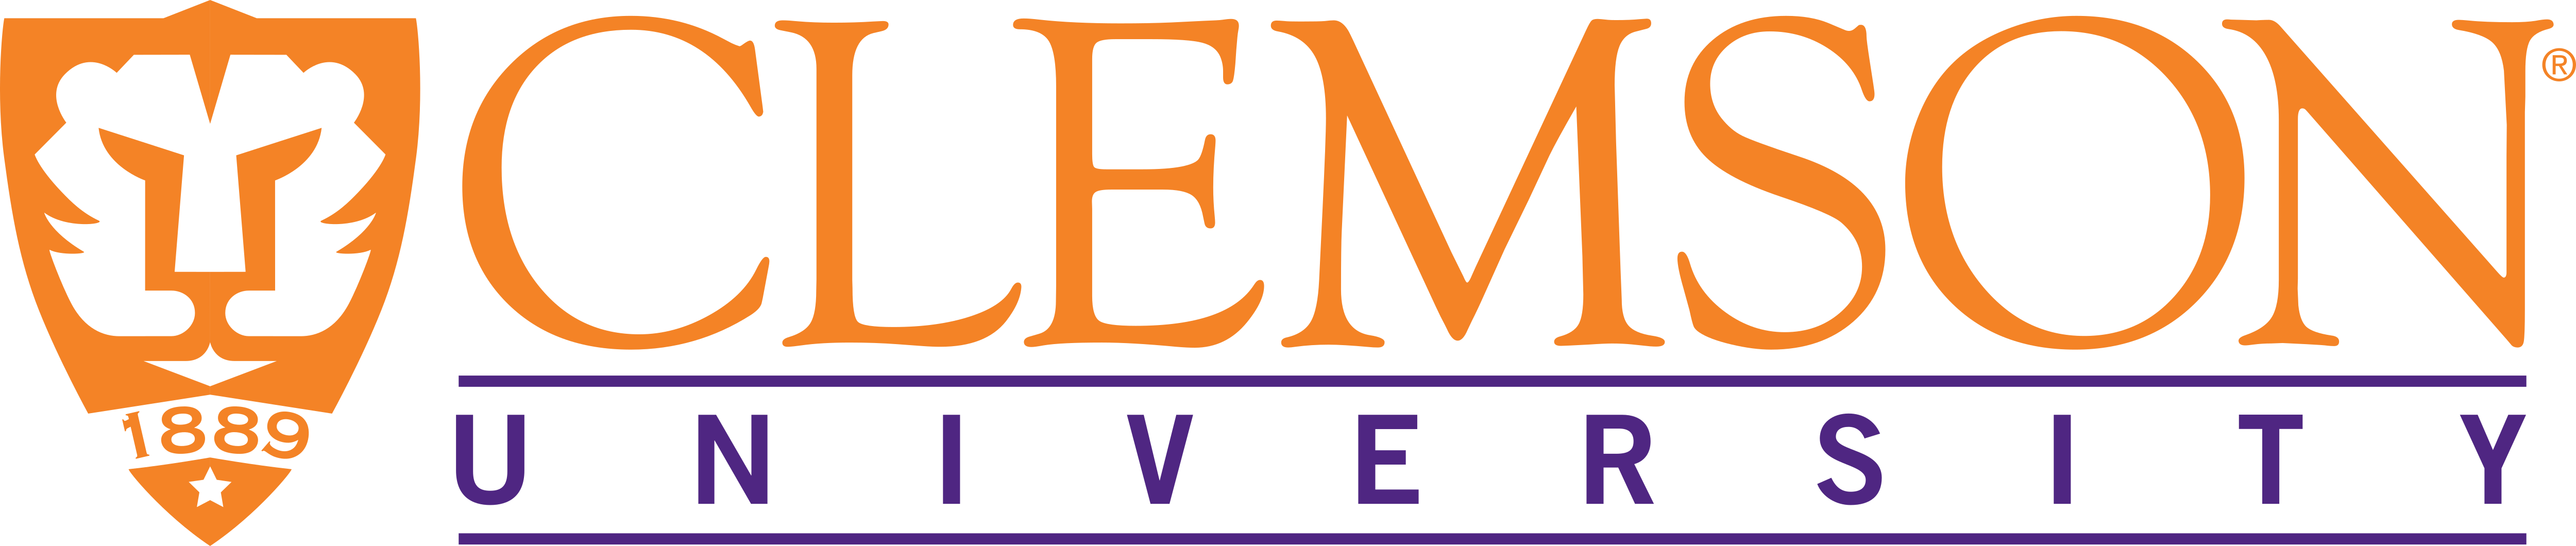 Clemson_University_Logo_horizontally